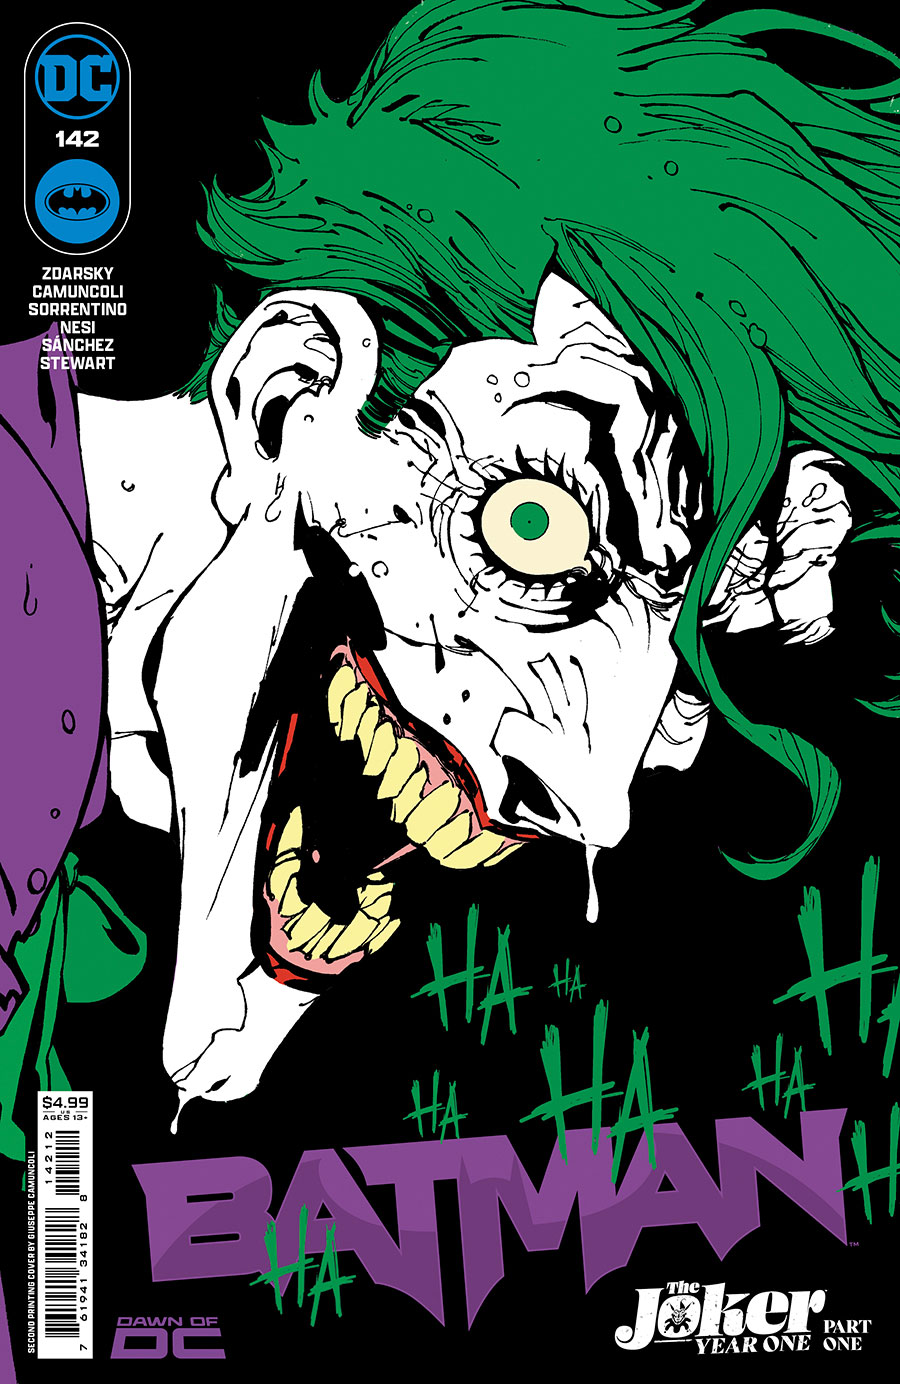 Batman Vol 3 #142 Cover G 2nd Ptg Giuseppe Camuncoli & Stefano Nesi Variant Cover